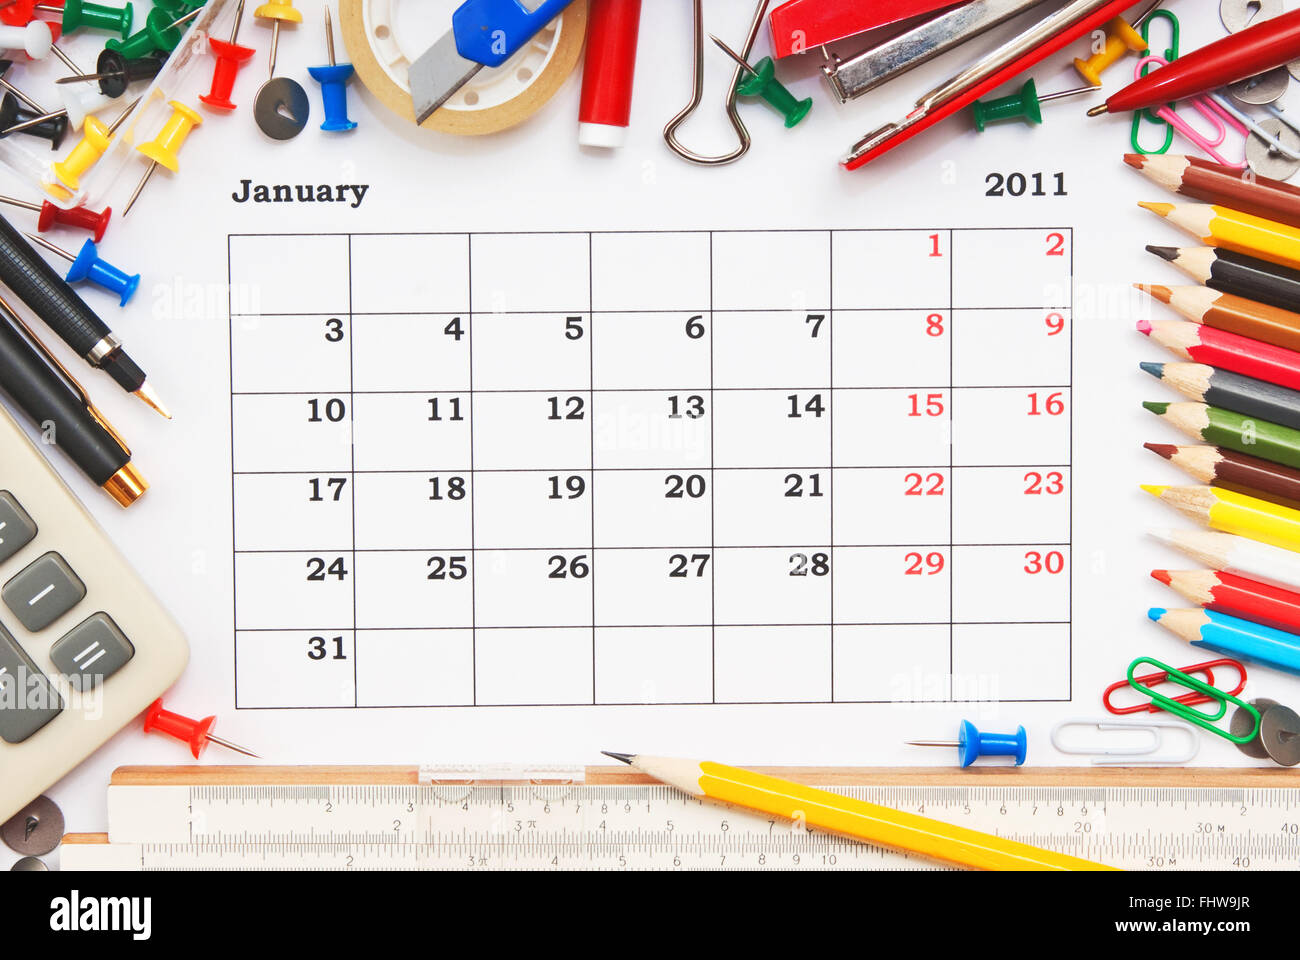 Calendar for January 2011 Stock Photo